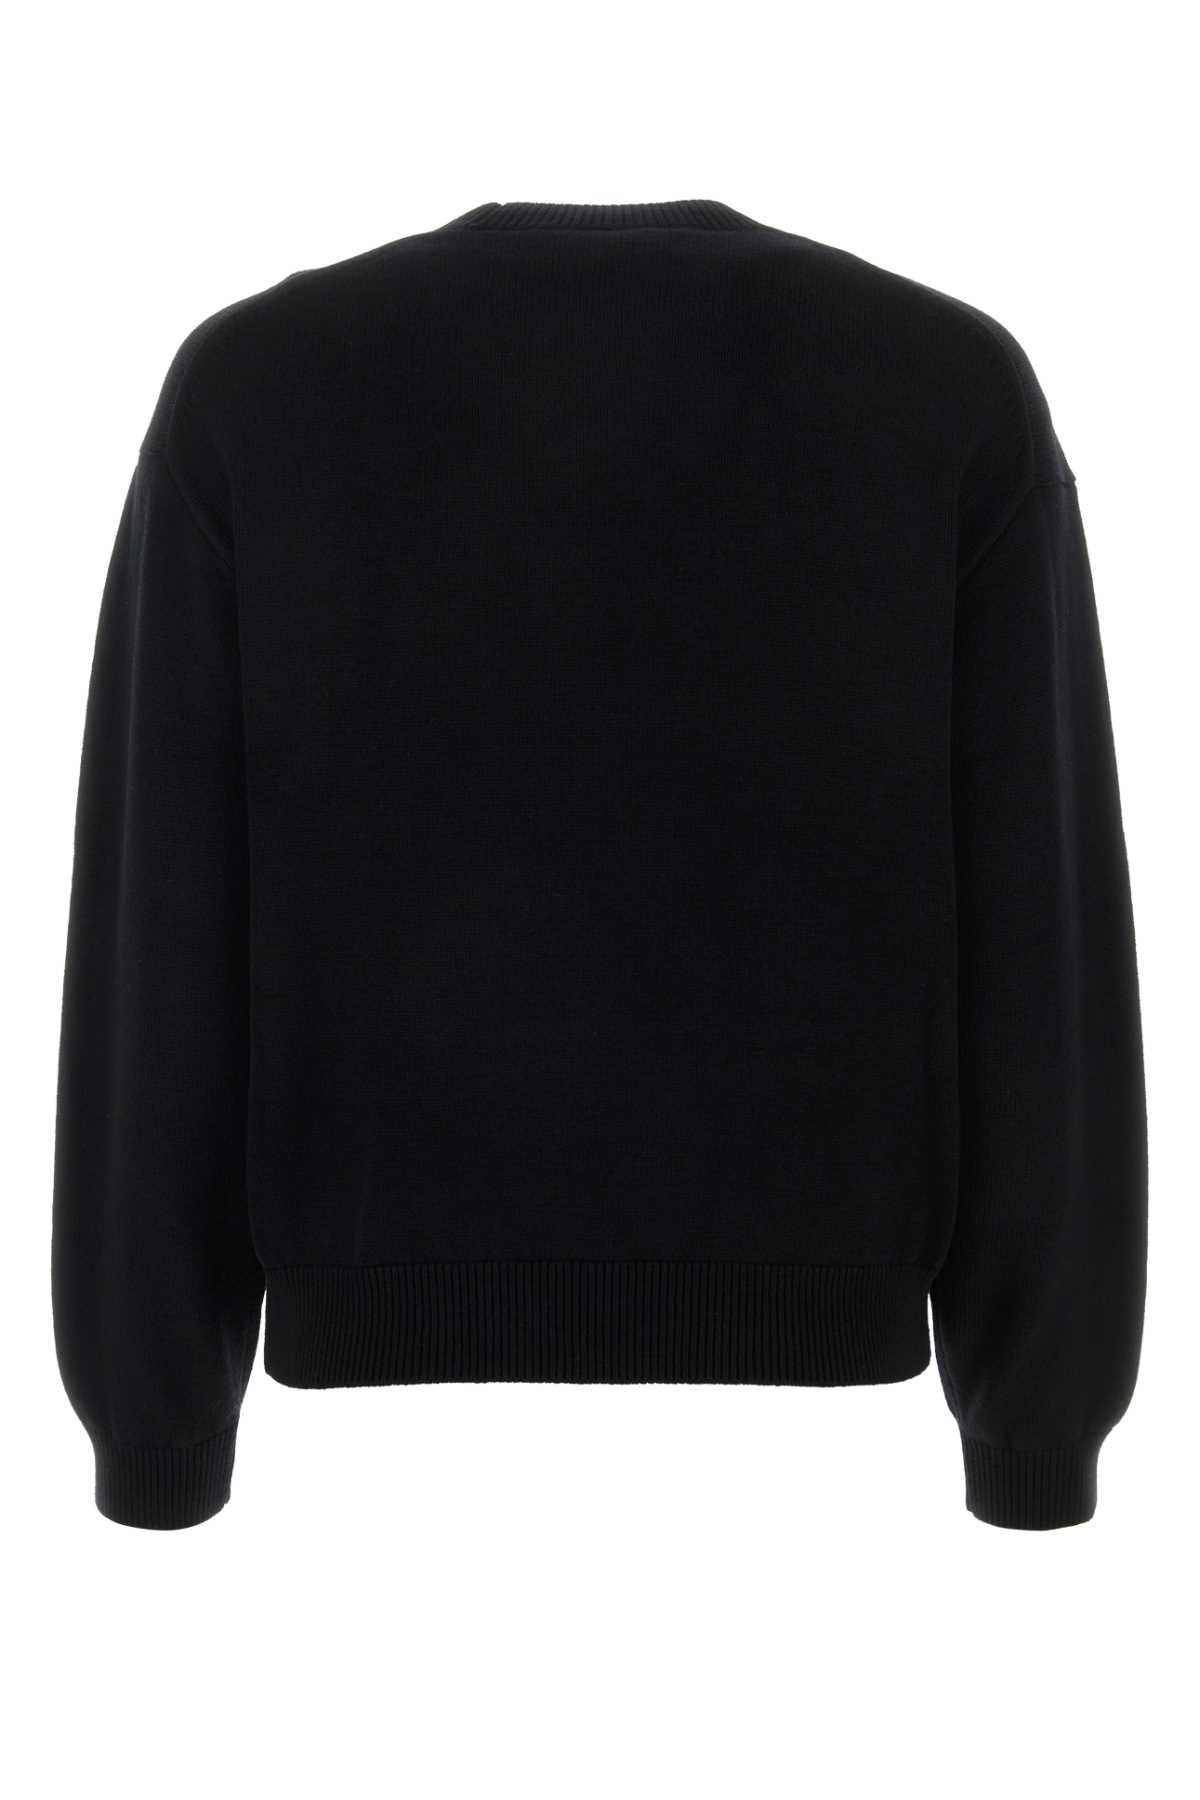 Shop Kenzo Black Wool Blend Sweater